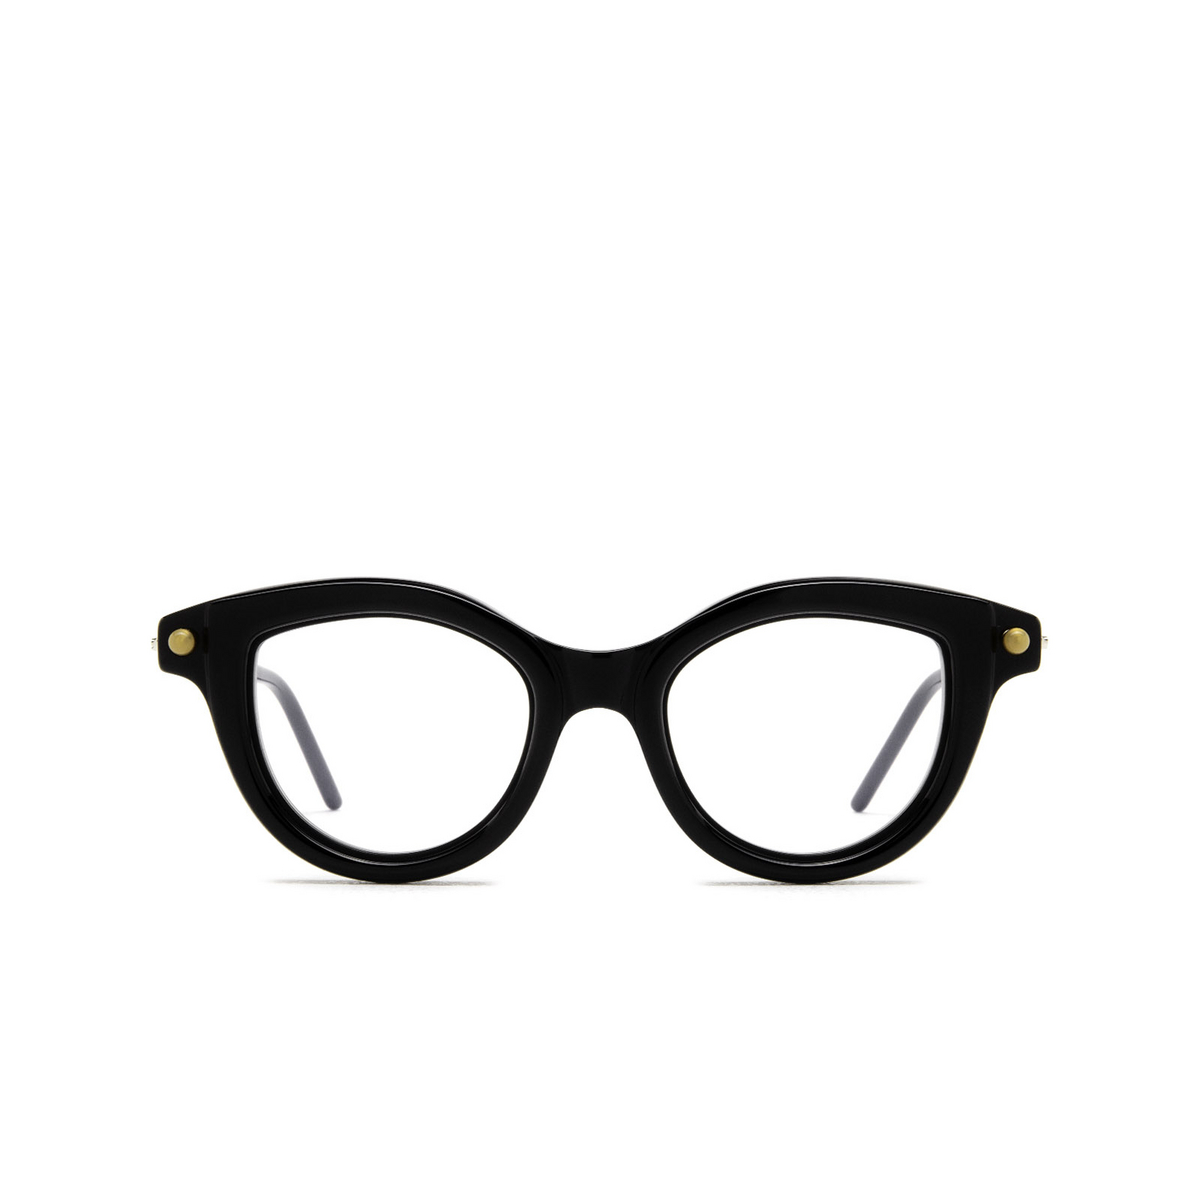 Kuboraum P7 Eyeglasses BS DT Black Shine & Dark Tortoise Black Shine - front view